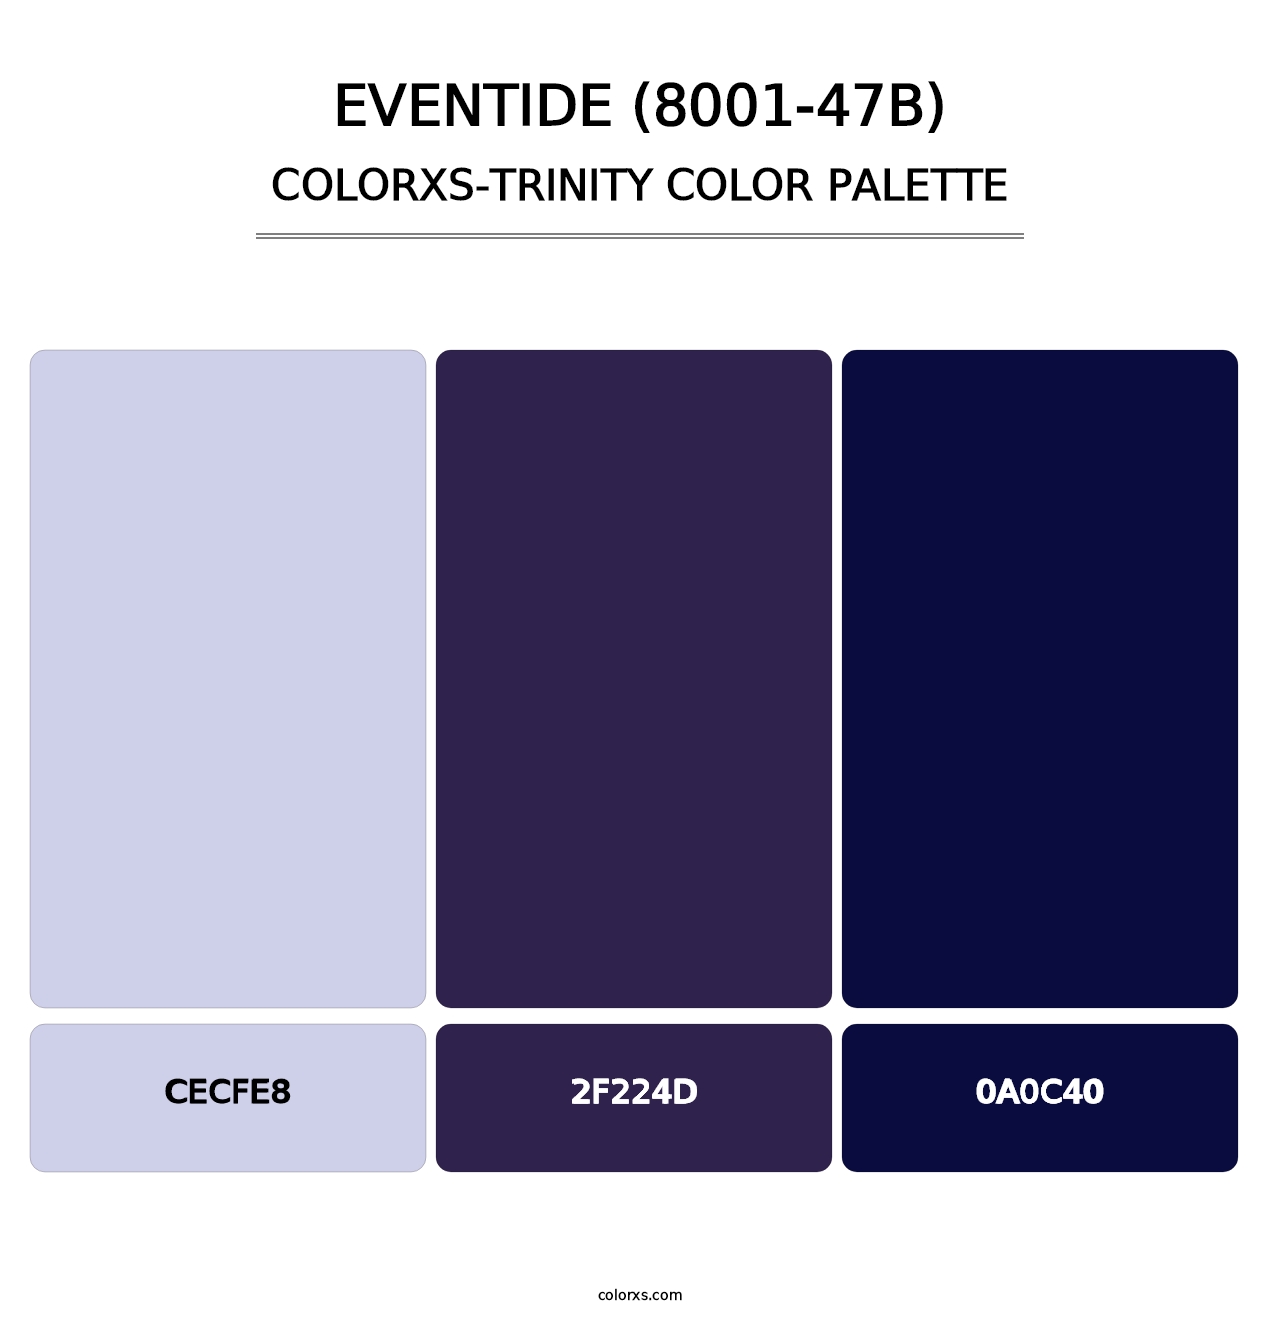 Eventide (8001-47B) - Colorxs Trinity Palette